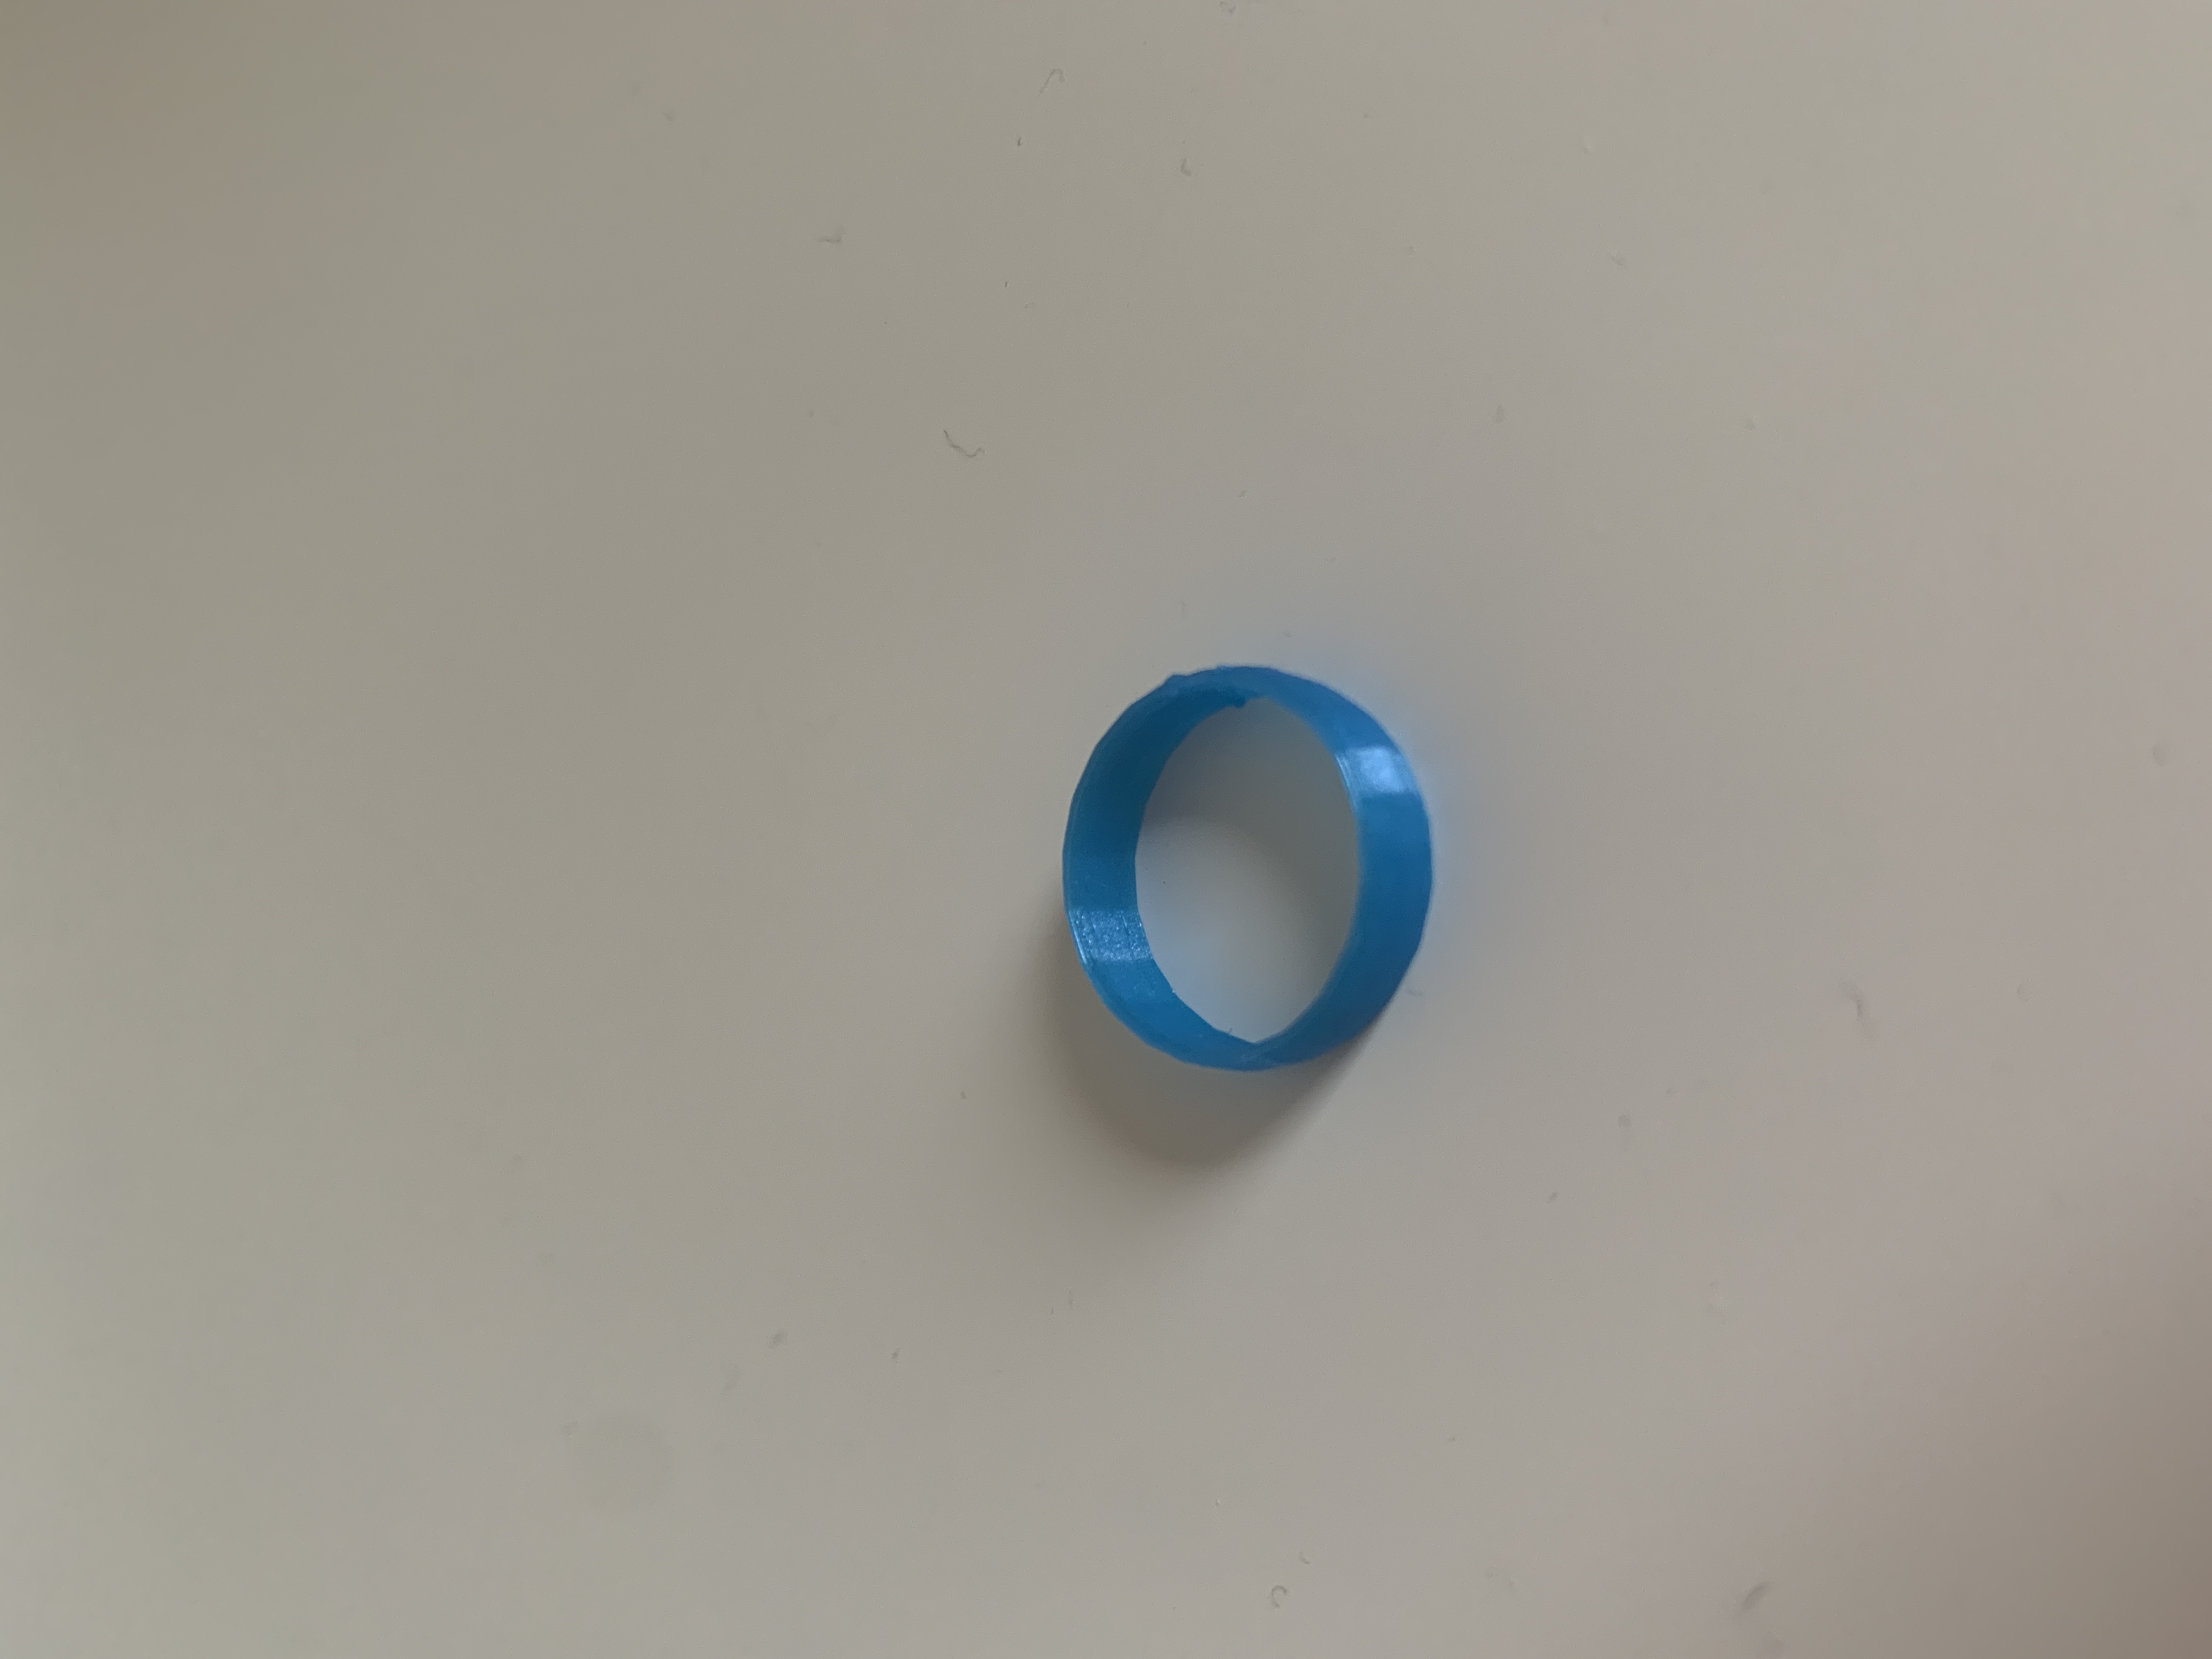 Anular rings